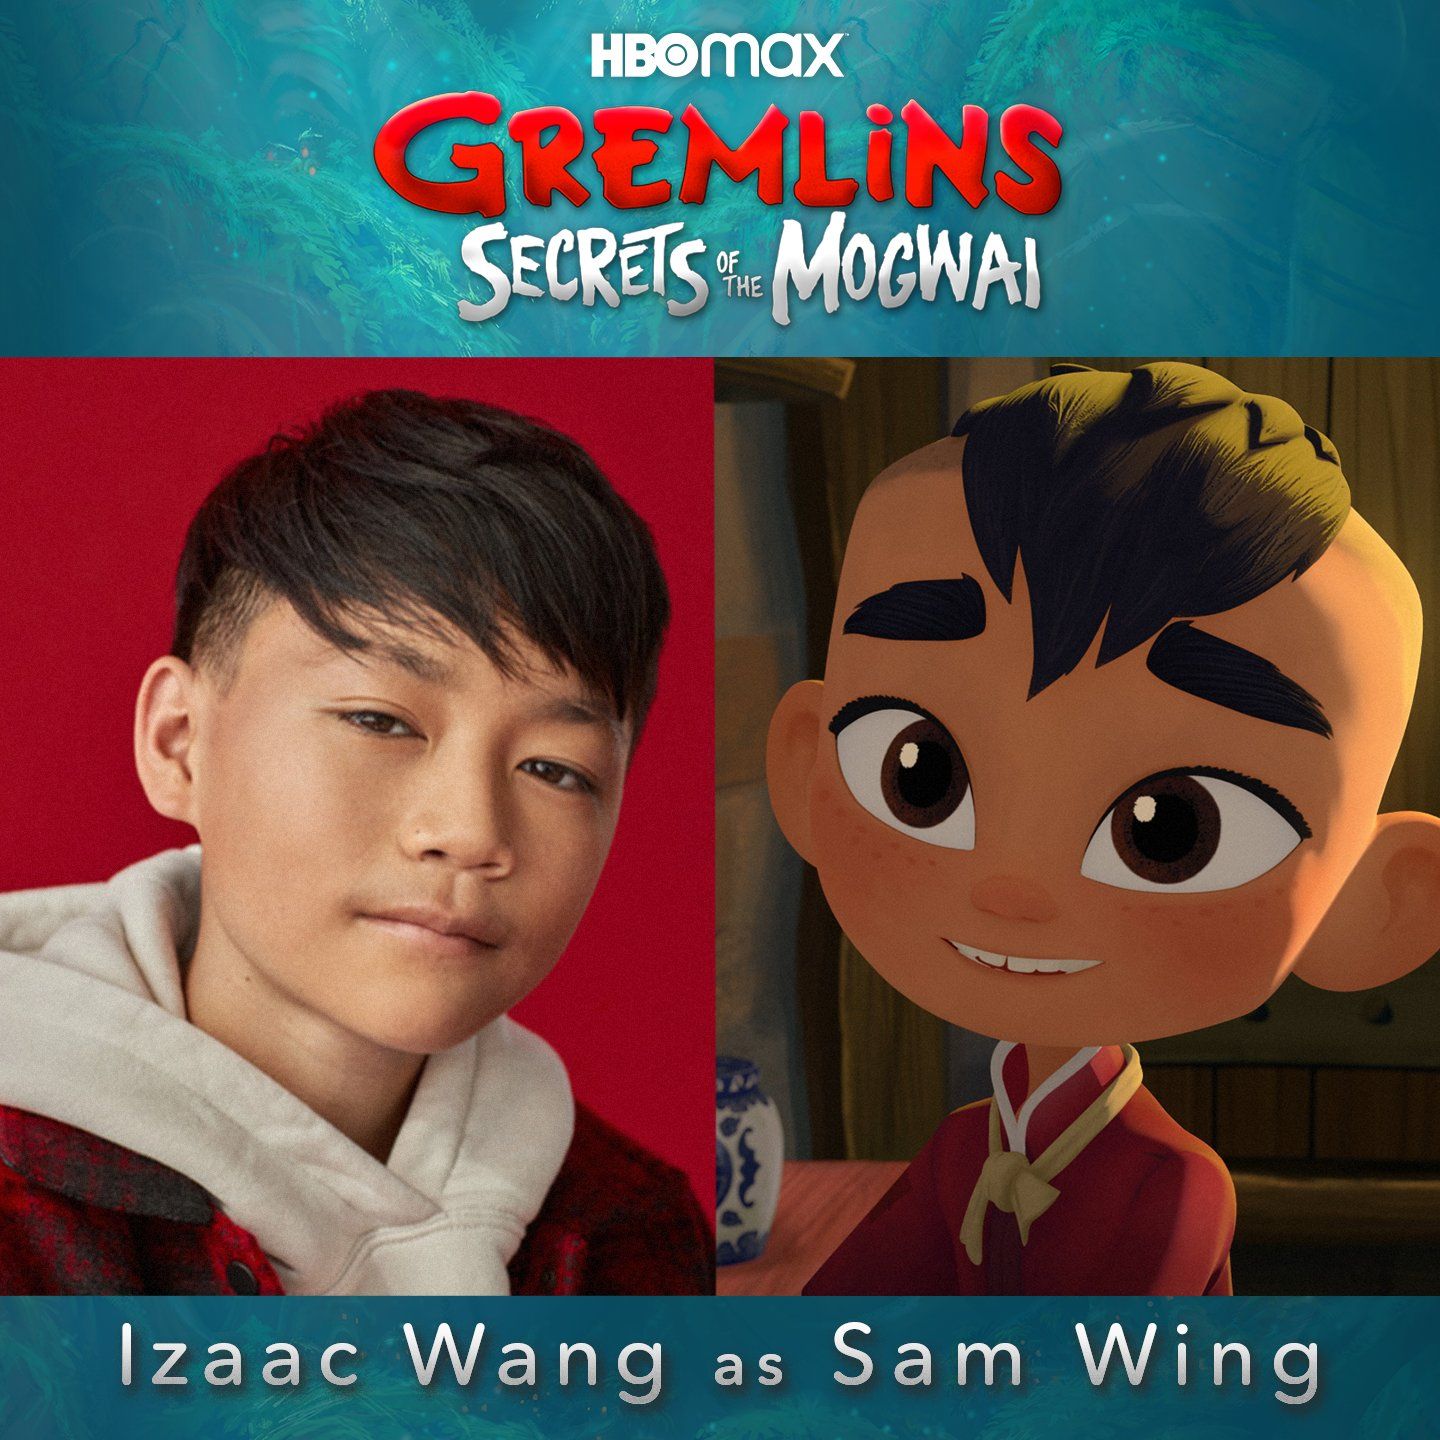 HBO Max Gremlins Secrets of the Mogwai Izaac Wang